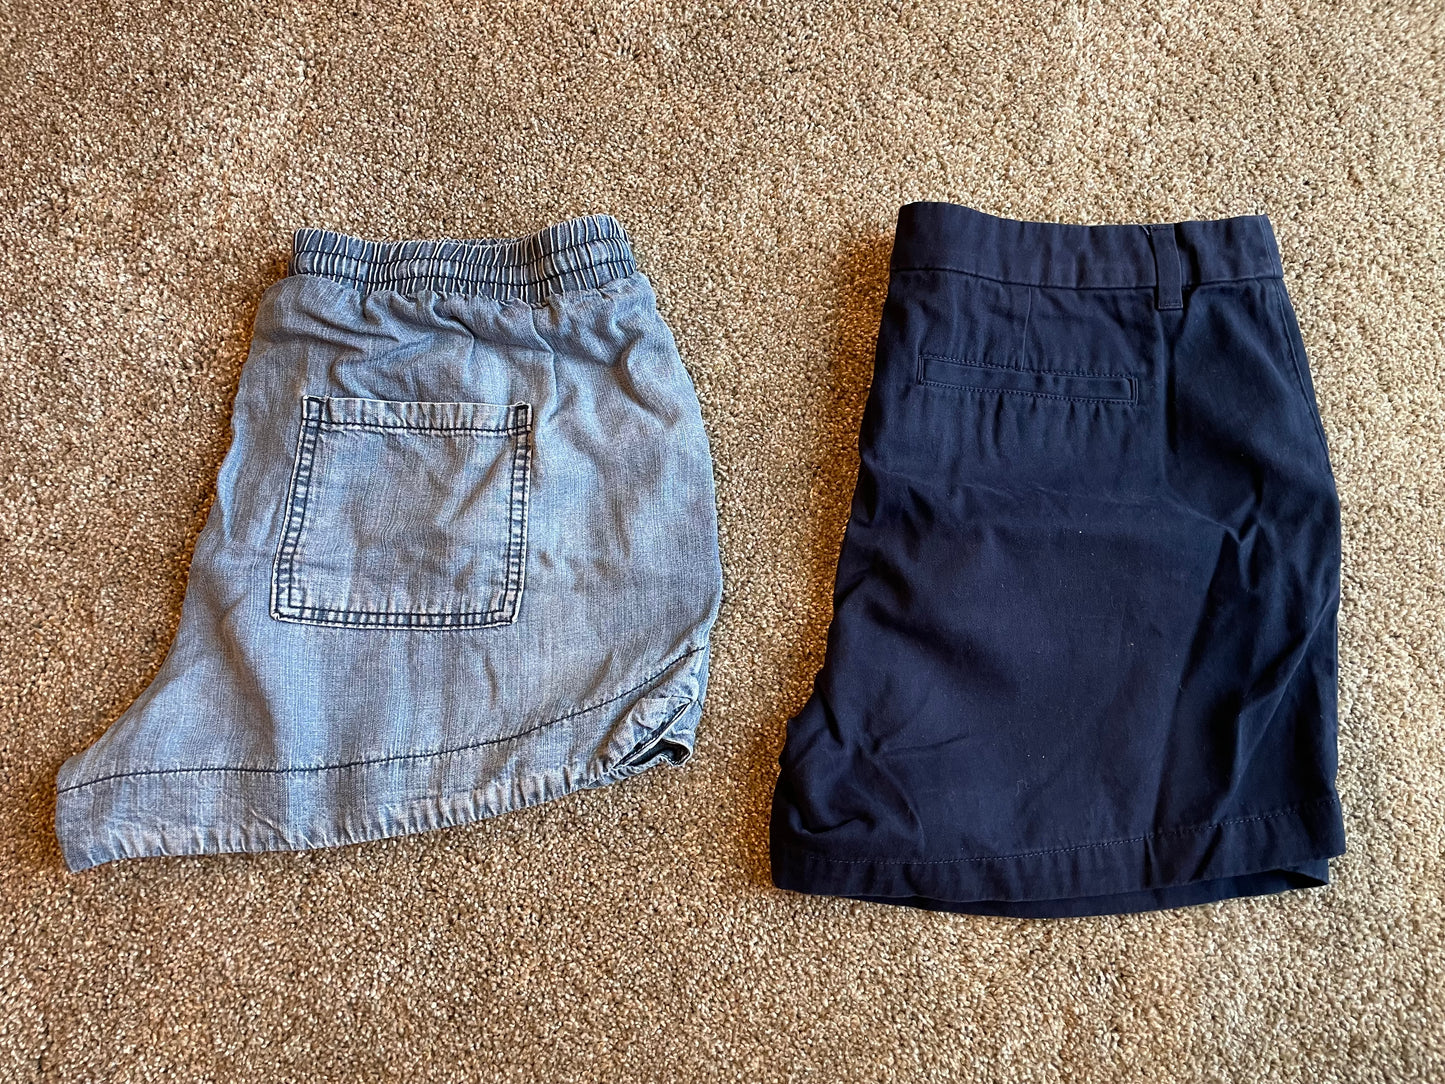 Women’s medium/size 10 shorts